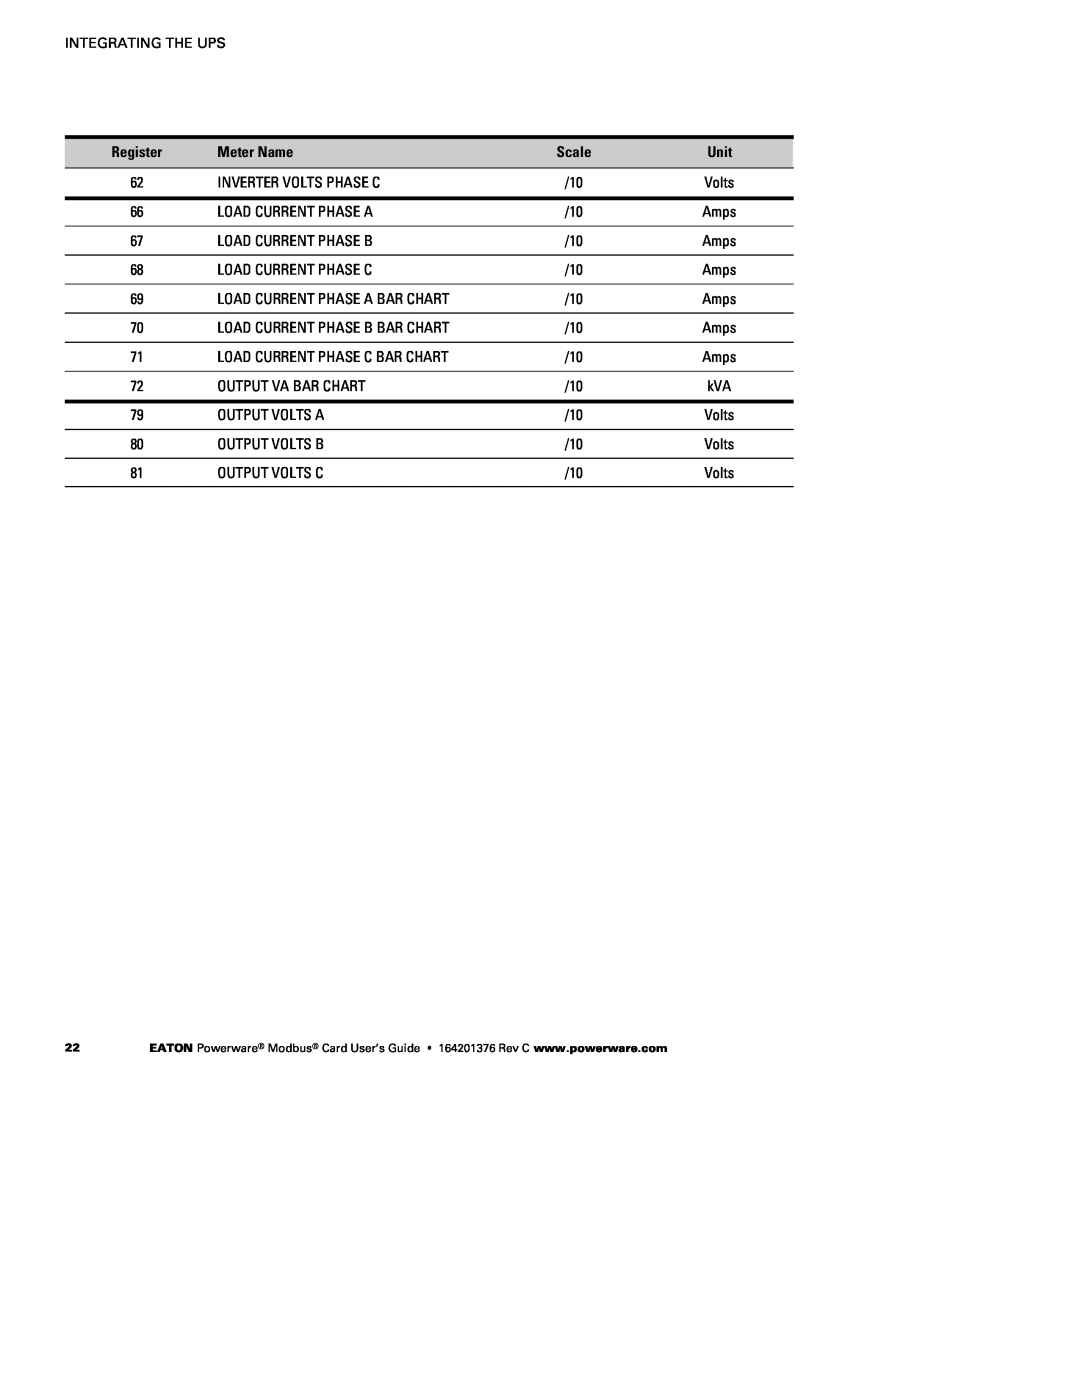 Powerware FCC 15 manual Register, Meter Name, Scale, Unit 